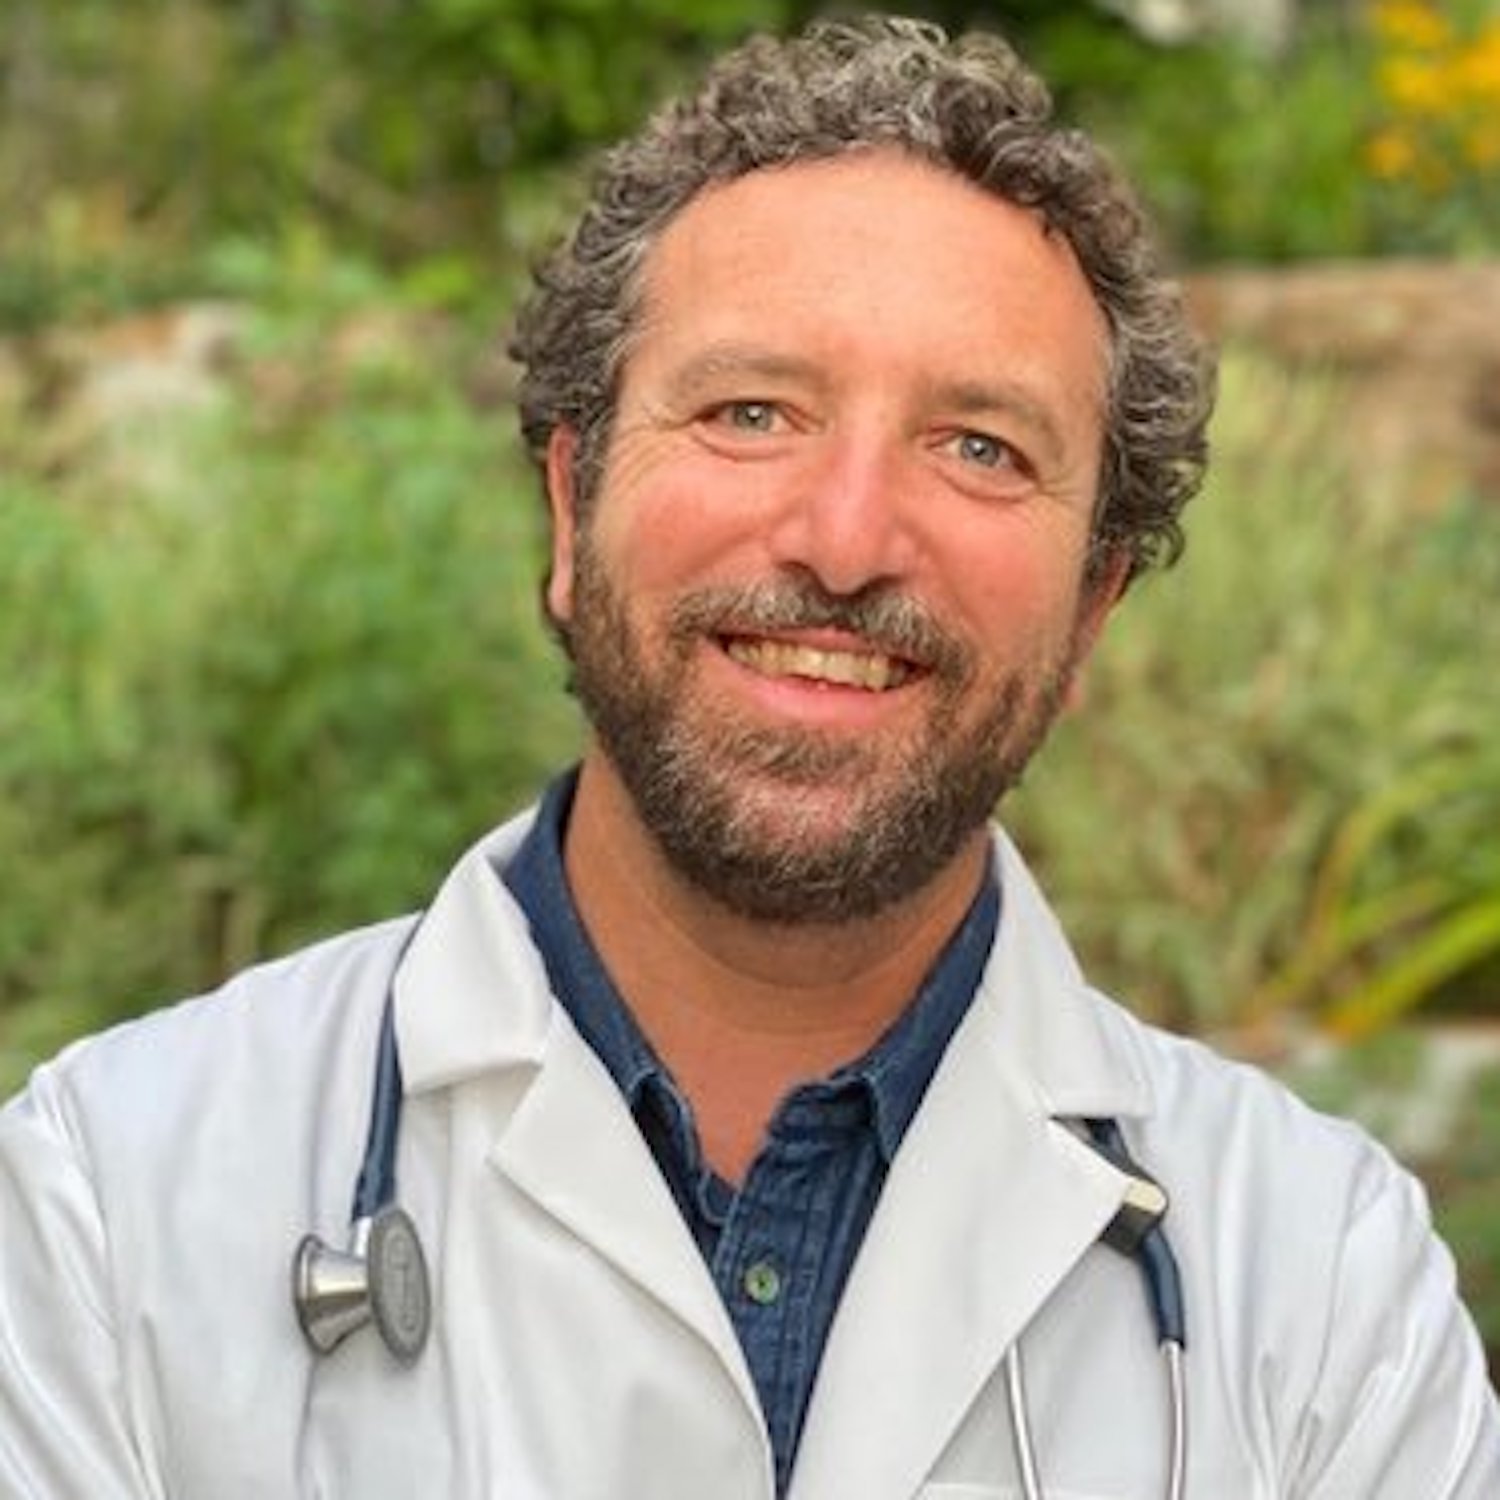 Dr. Josh Levitt – Naturopathic Medicine; What’s Old is New Again